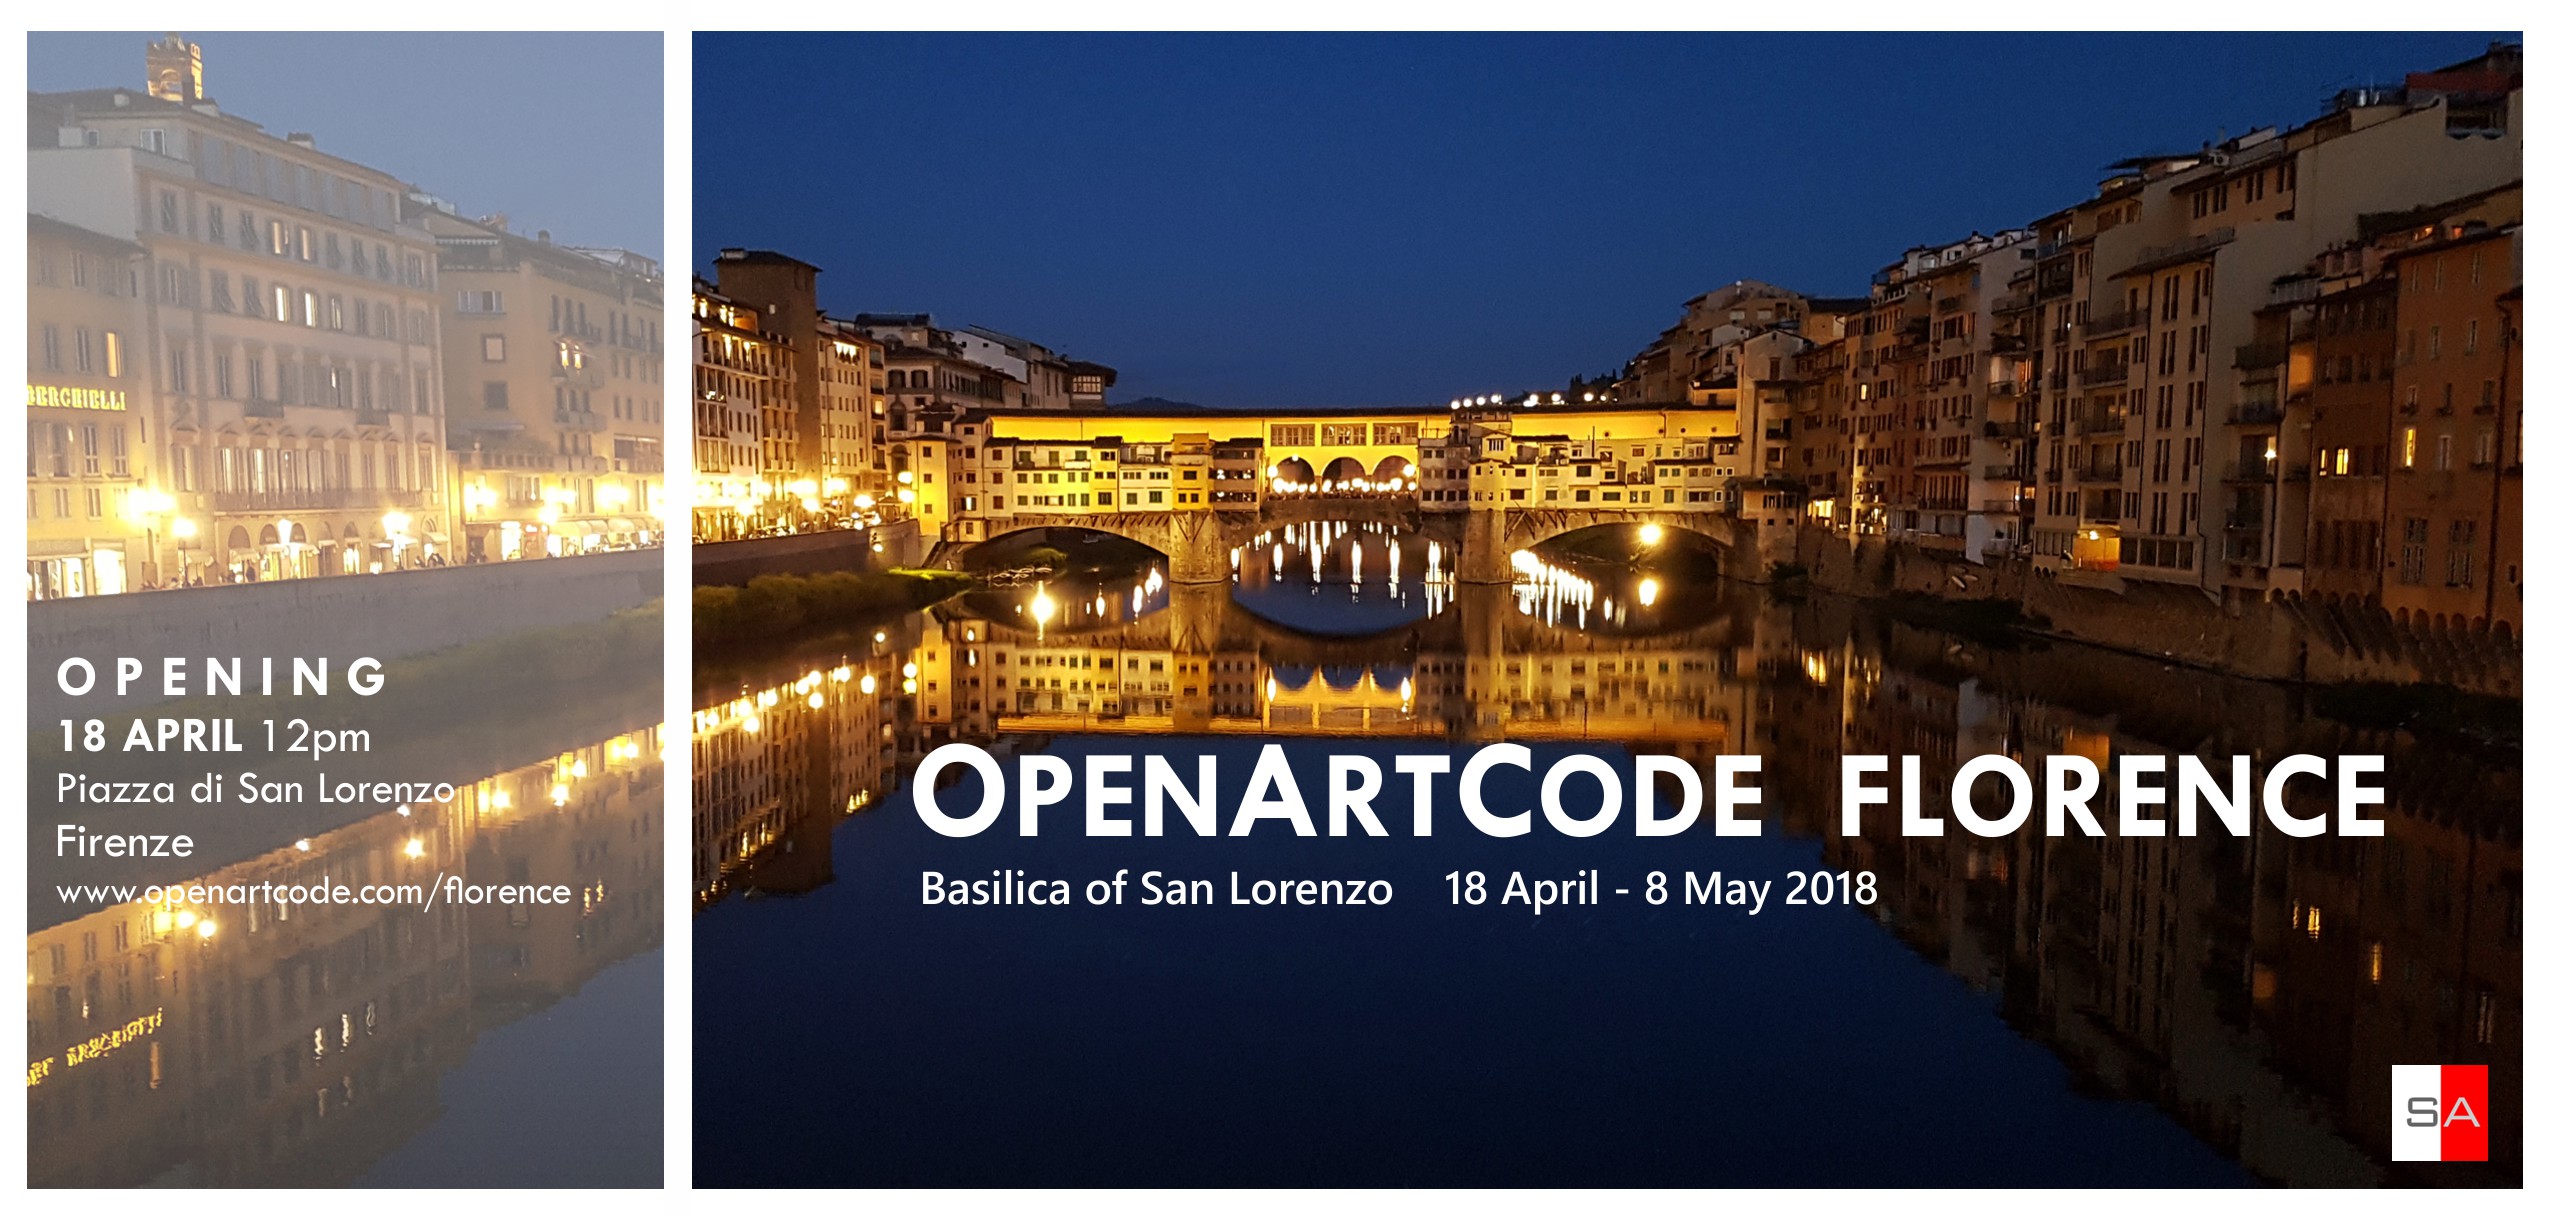 OpenArtCode-Florence-invitation